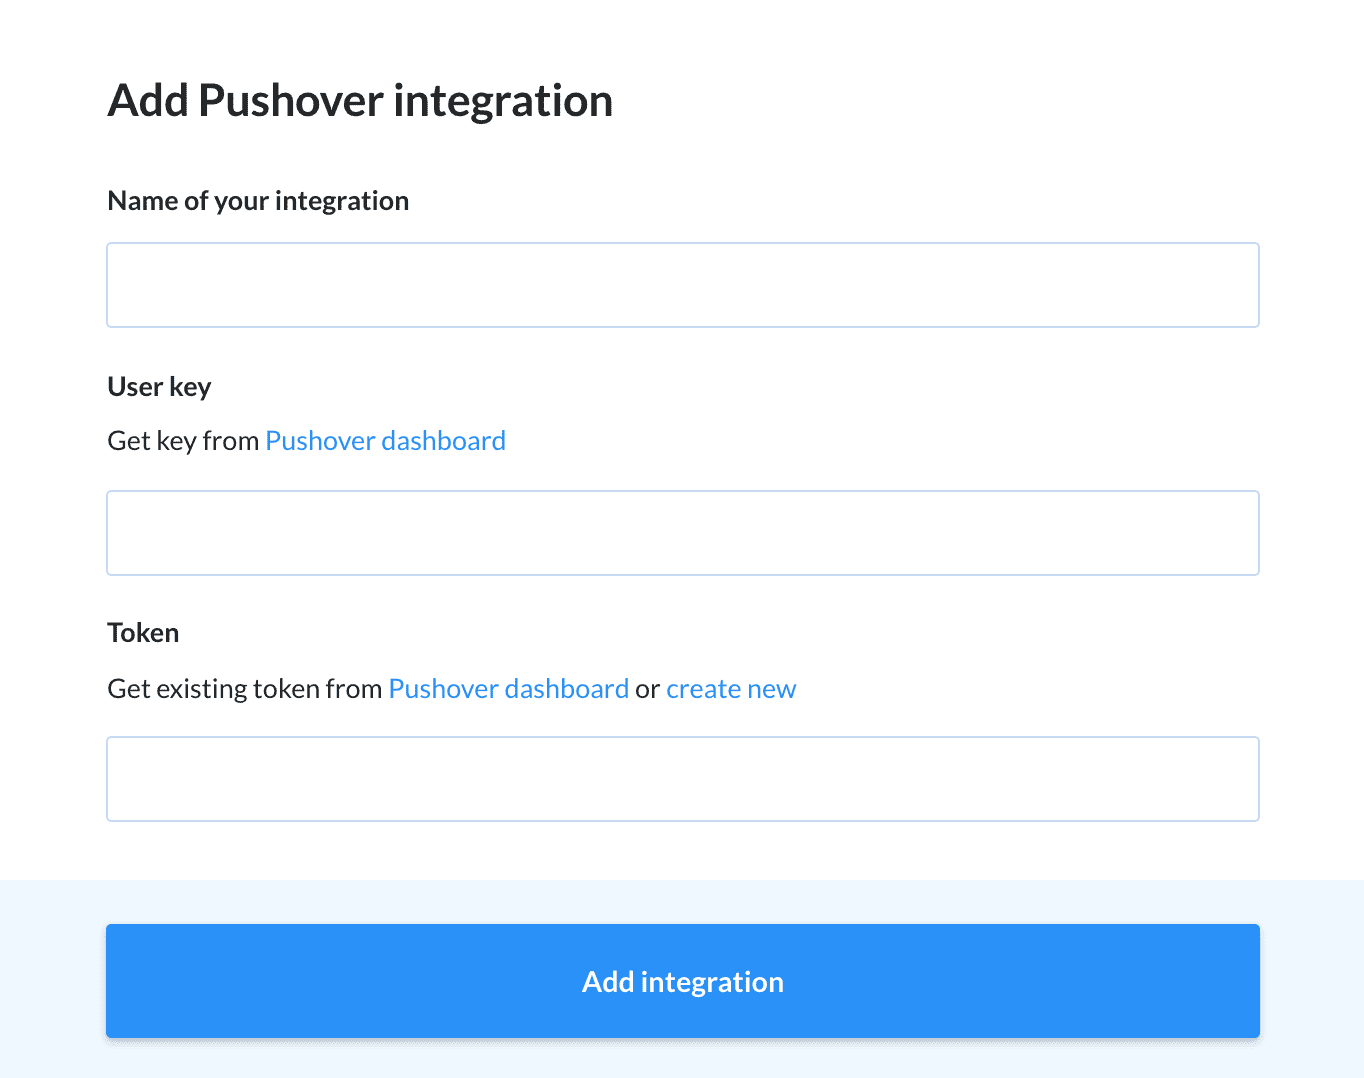 Adding Pushover integration